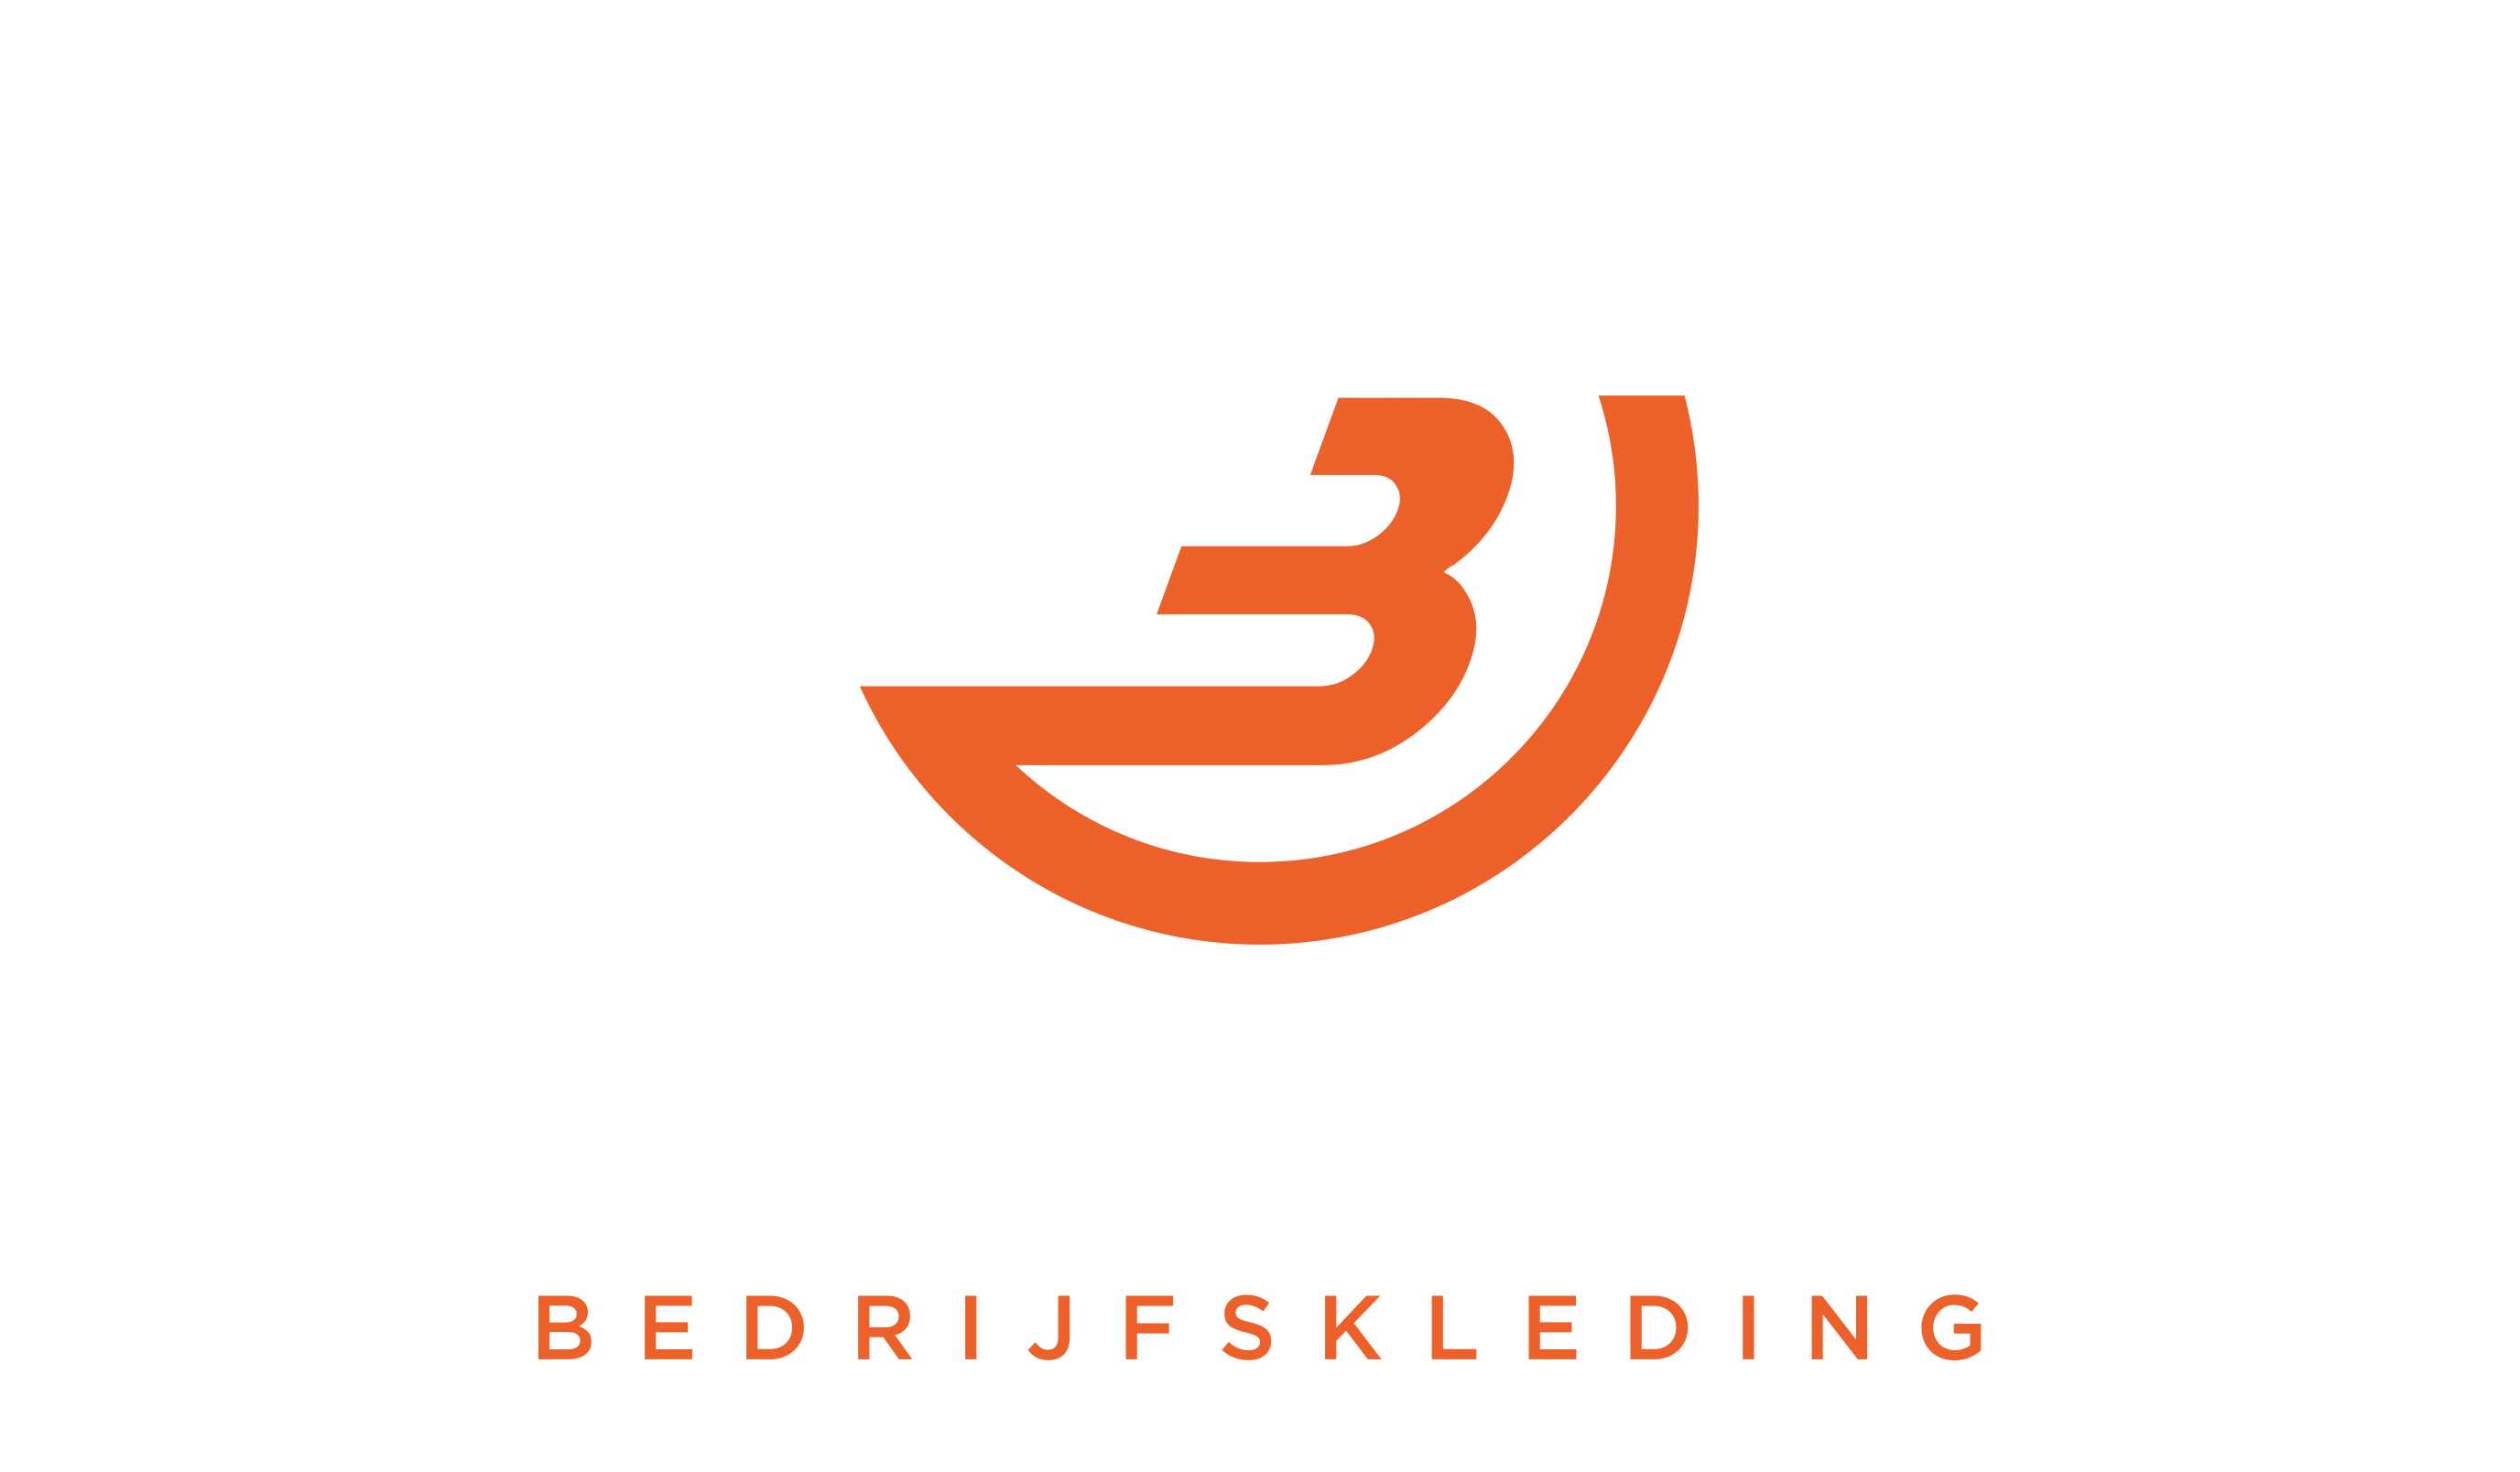 Logo Frederiks bedrijfskleding